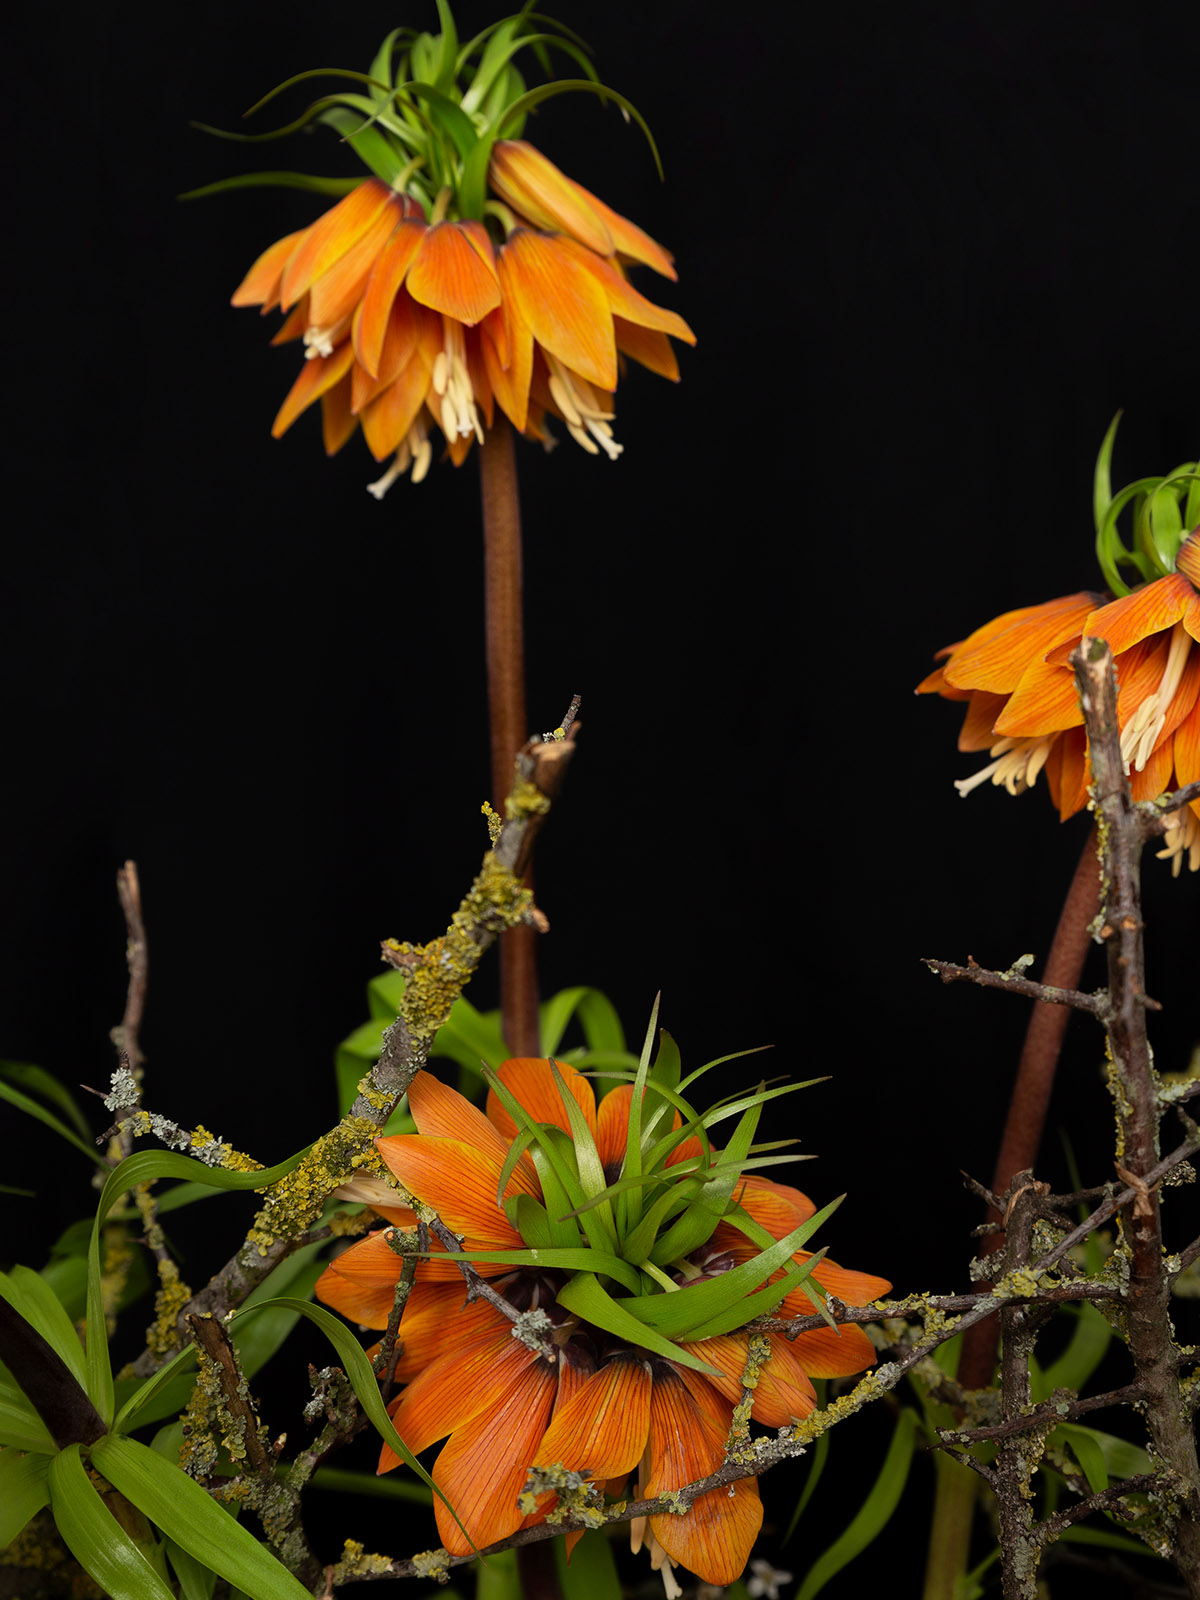 Fritillaria Orange Sweet close-up - on Thursd